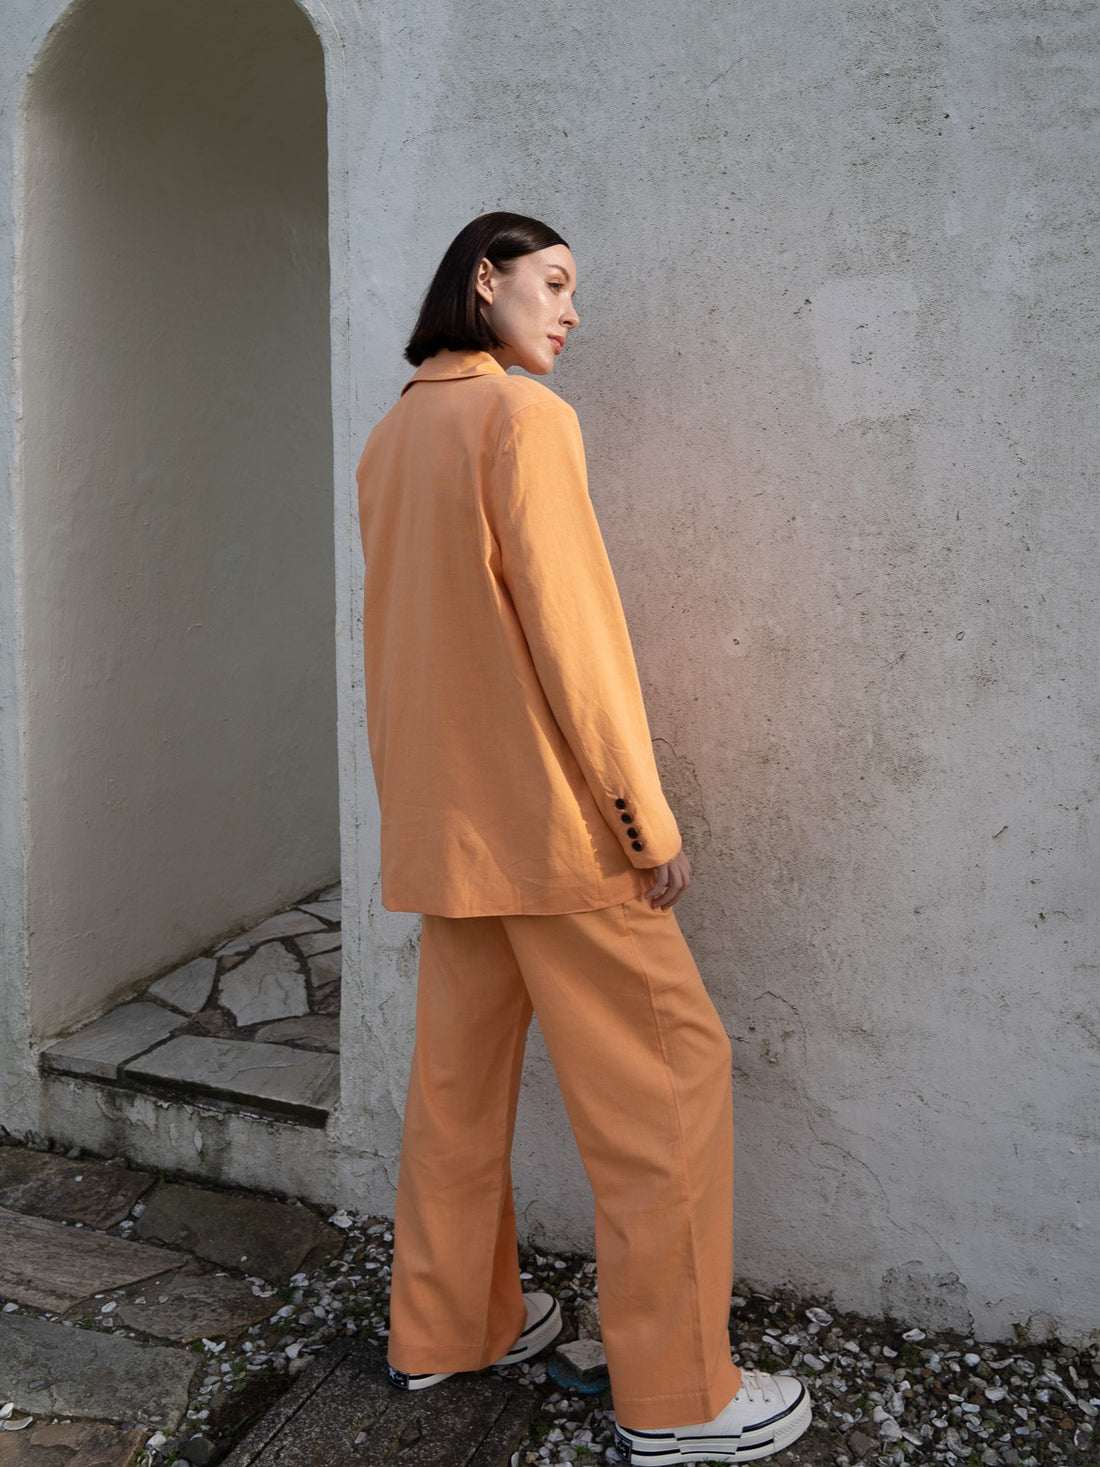 oriental linen jacket / 琥珀(light orange)